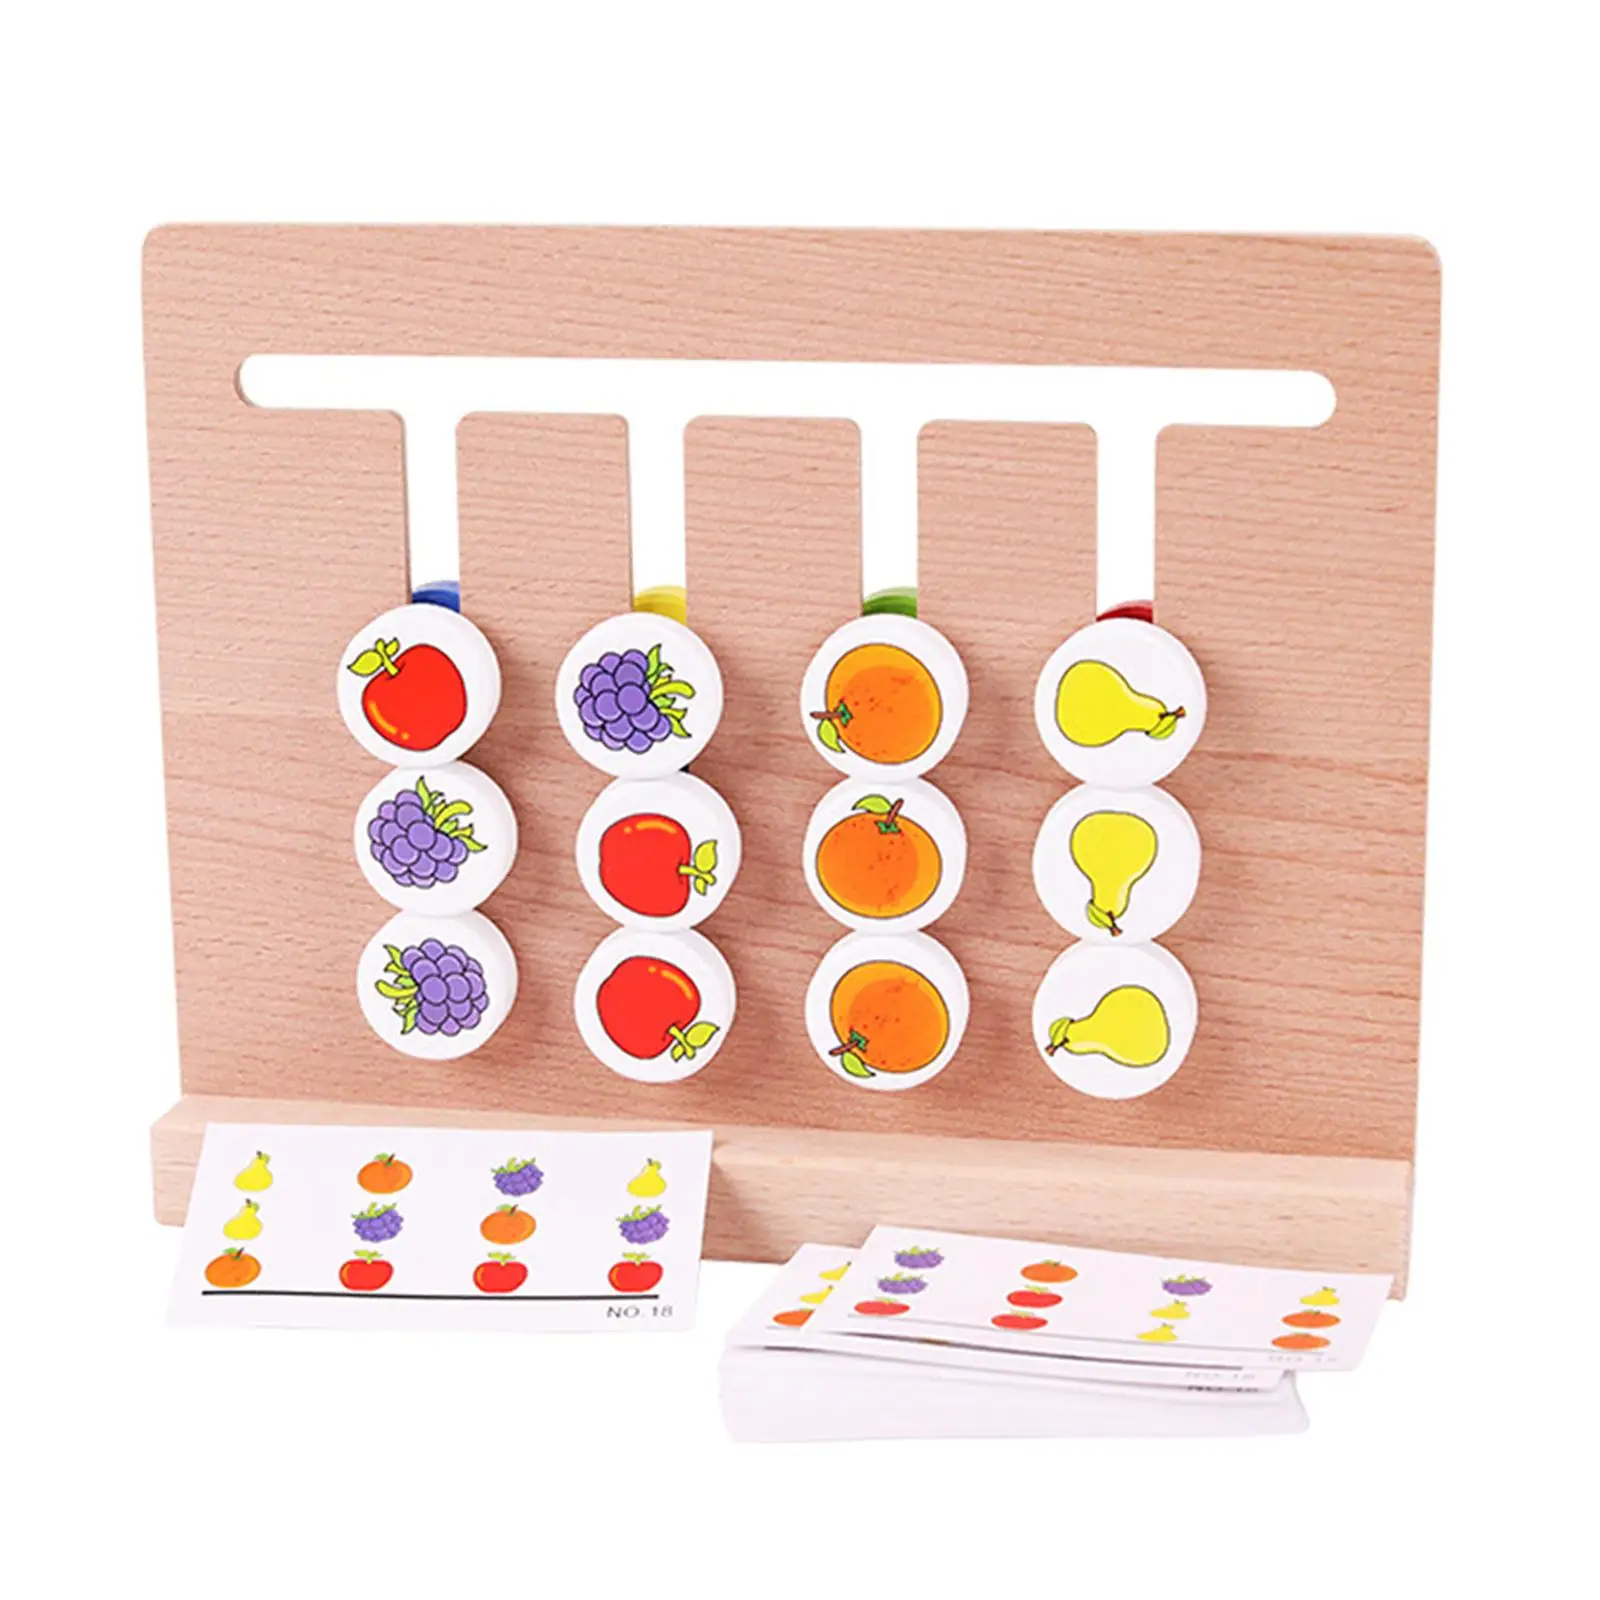 Color Sort Board Developmental Toy Teaching Aids for Kindergarten Party